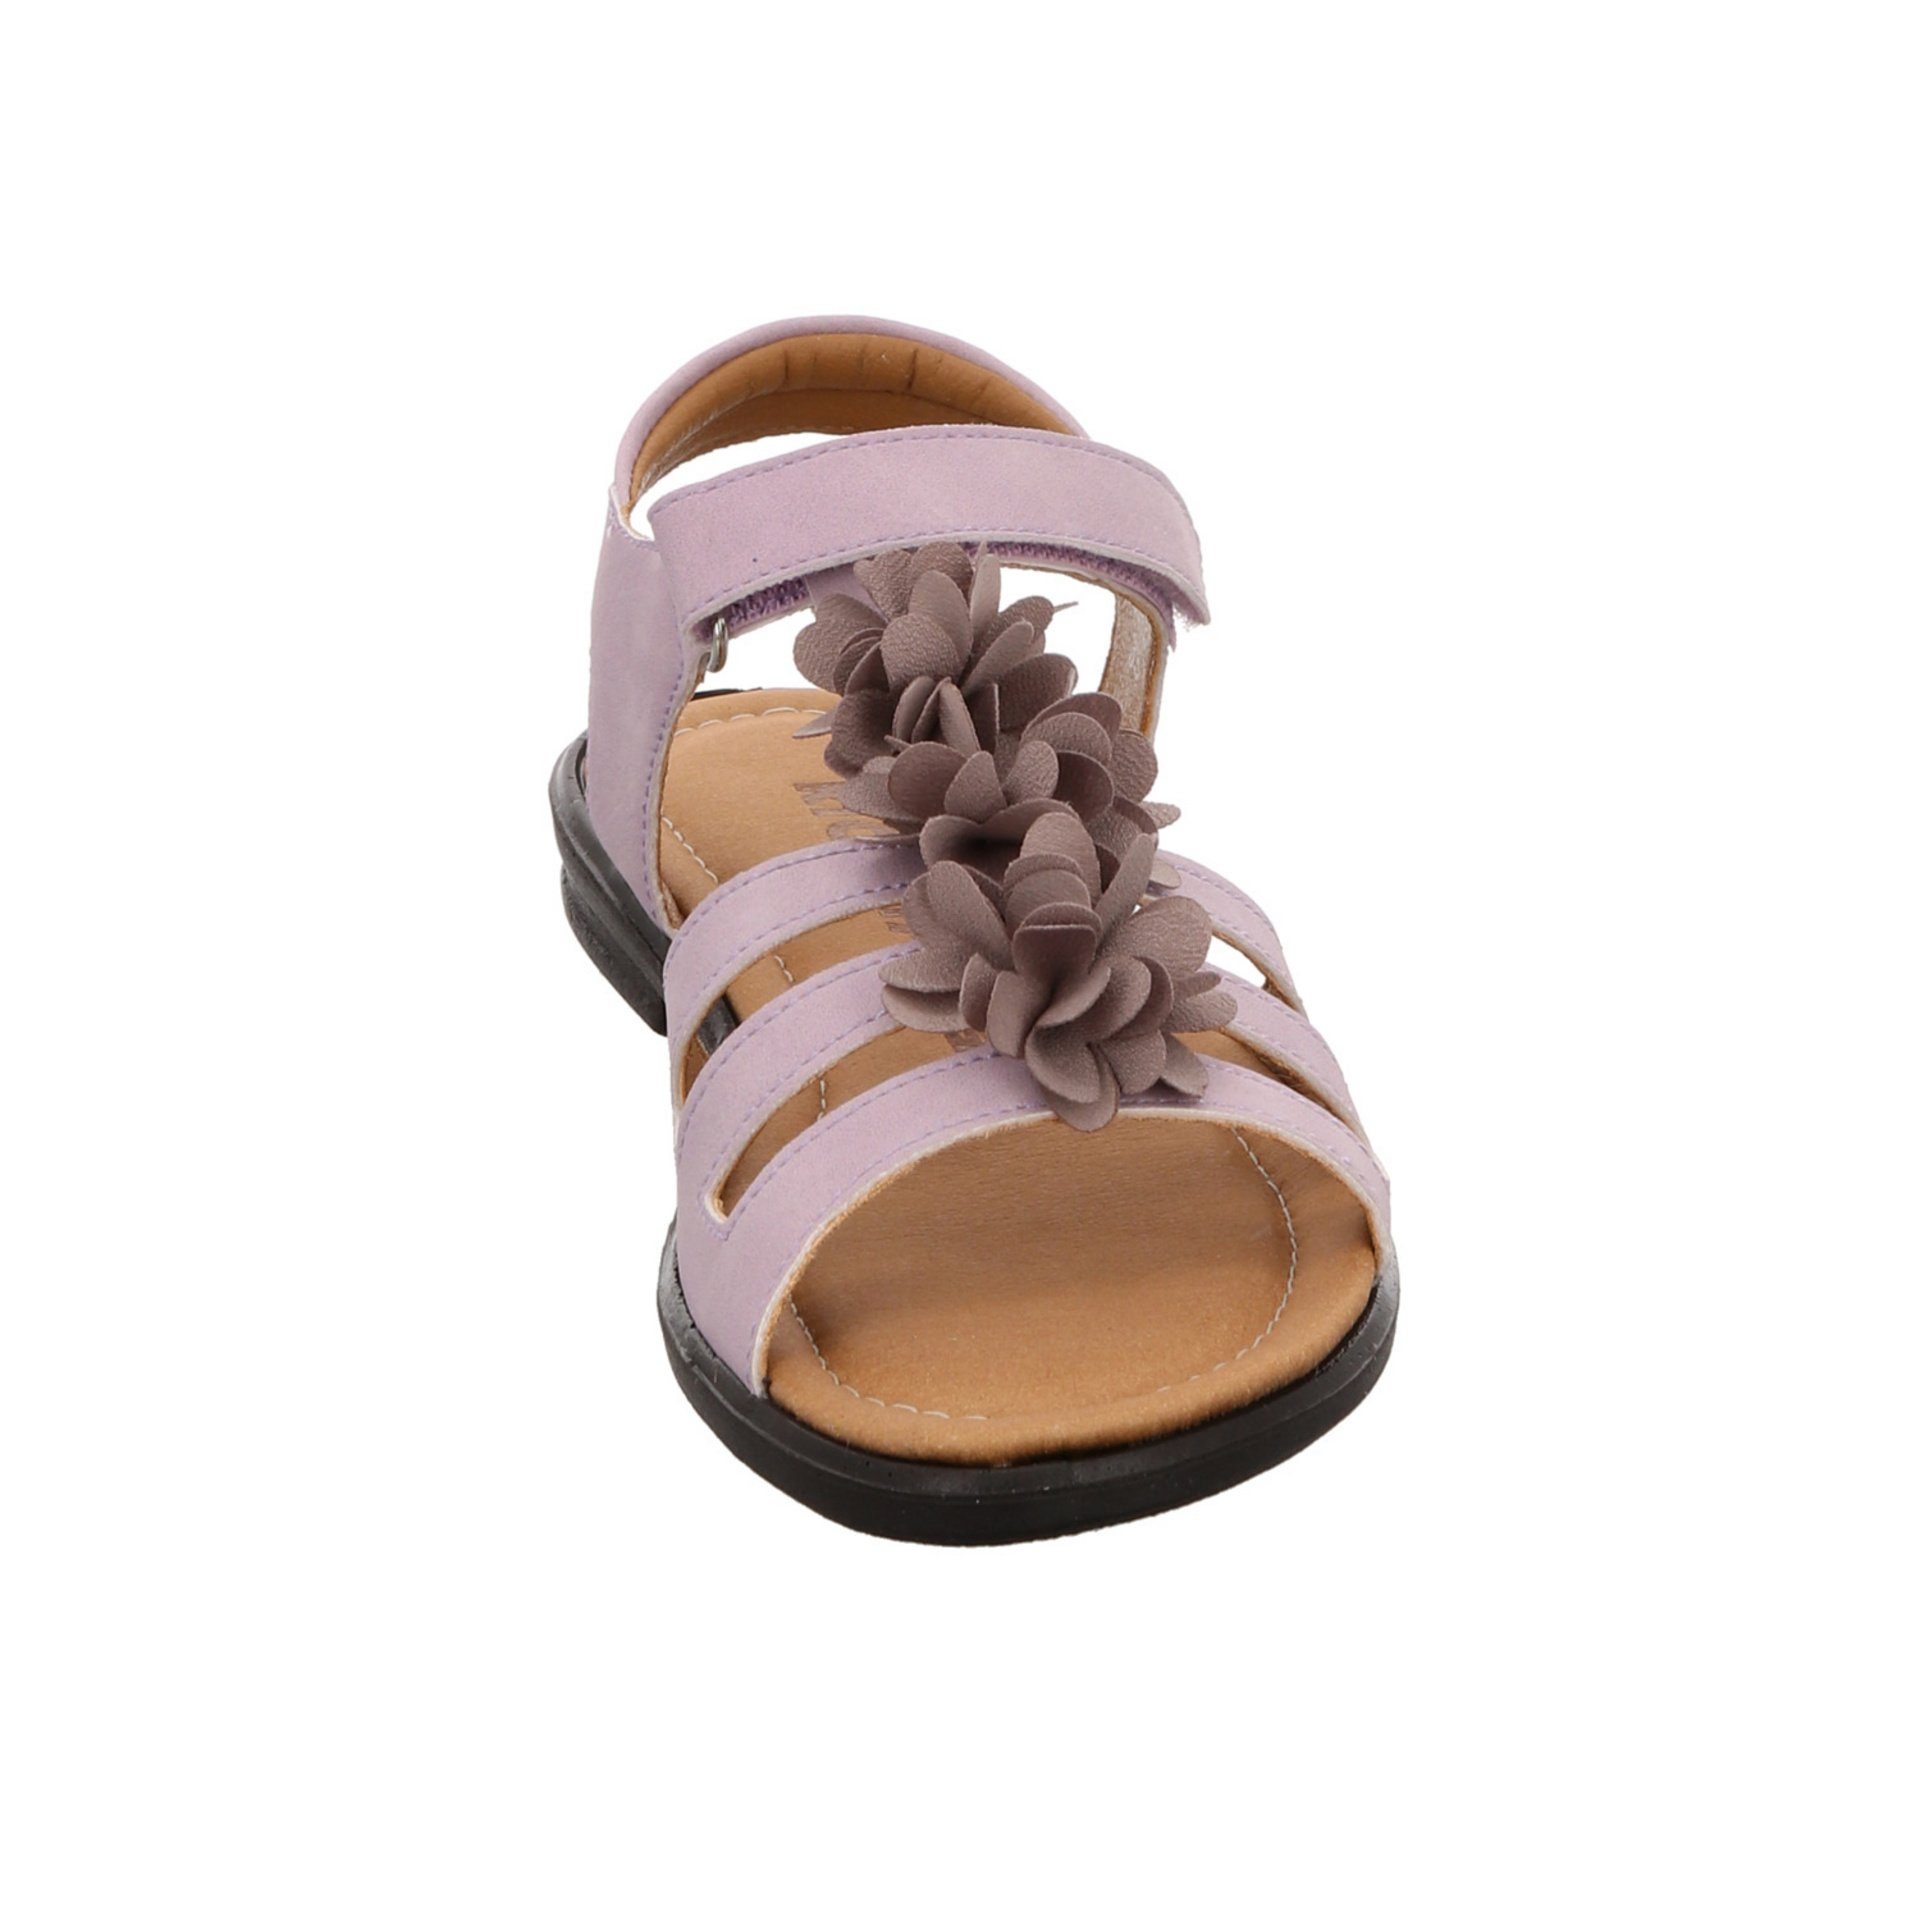 Schuhe Sandale Synthetik Mädchen Sandalen hell Ricosta Sandale Aurora rot+lila